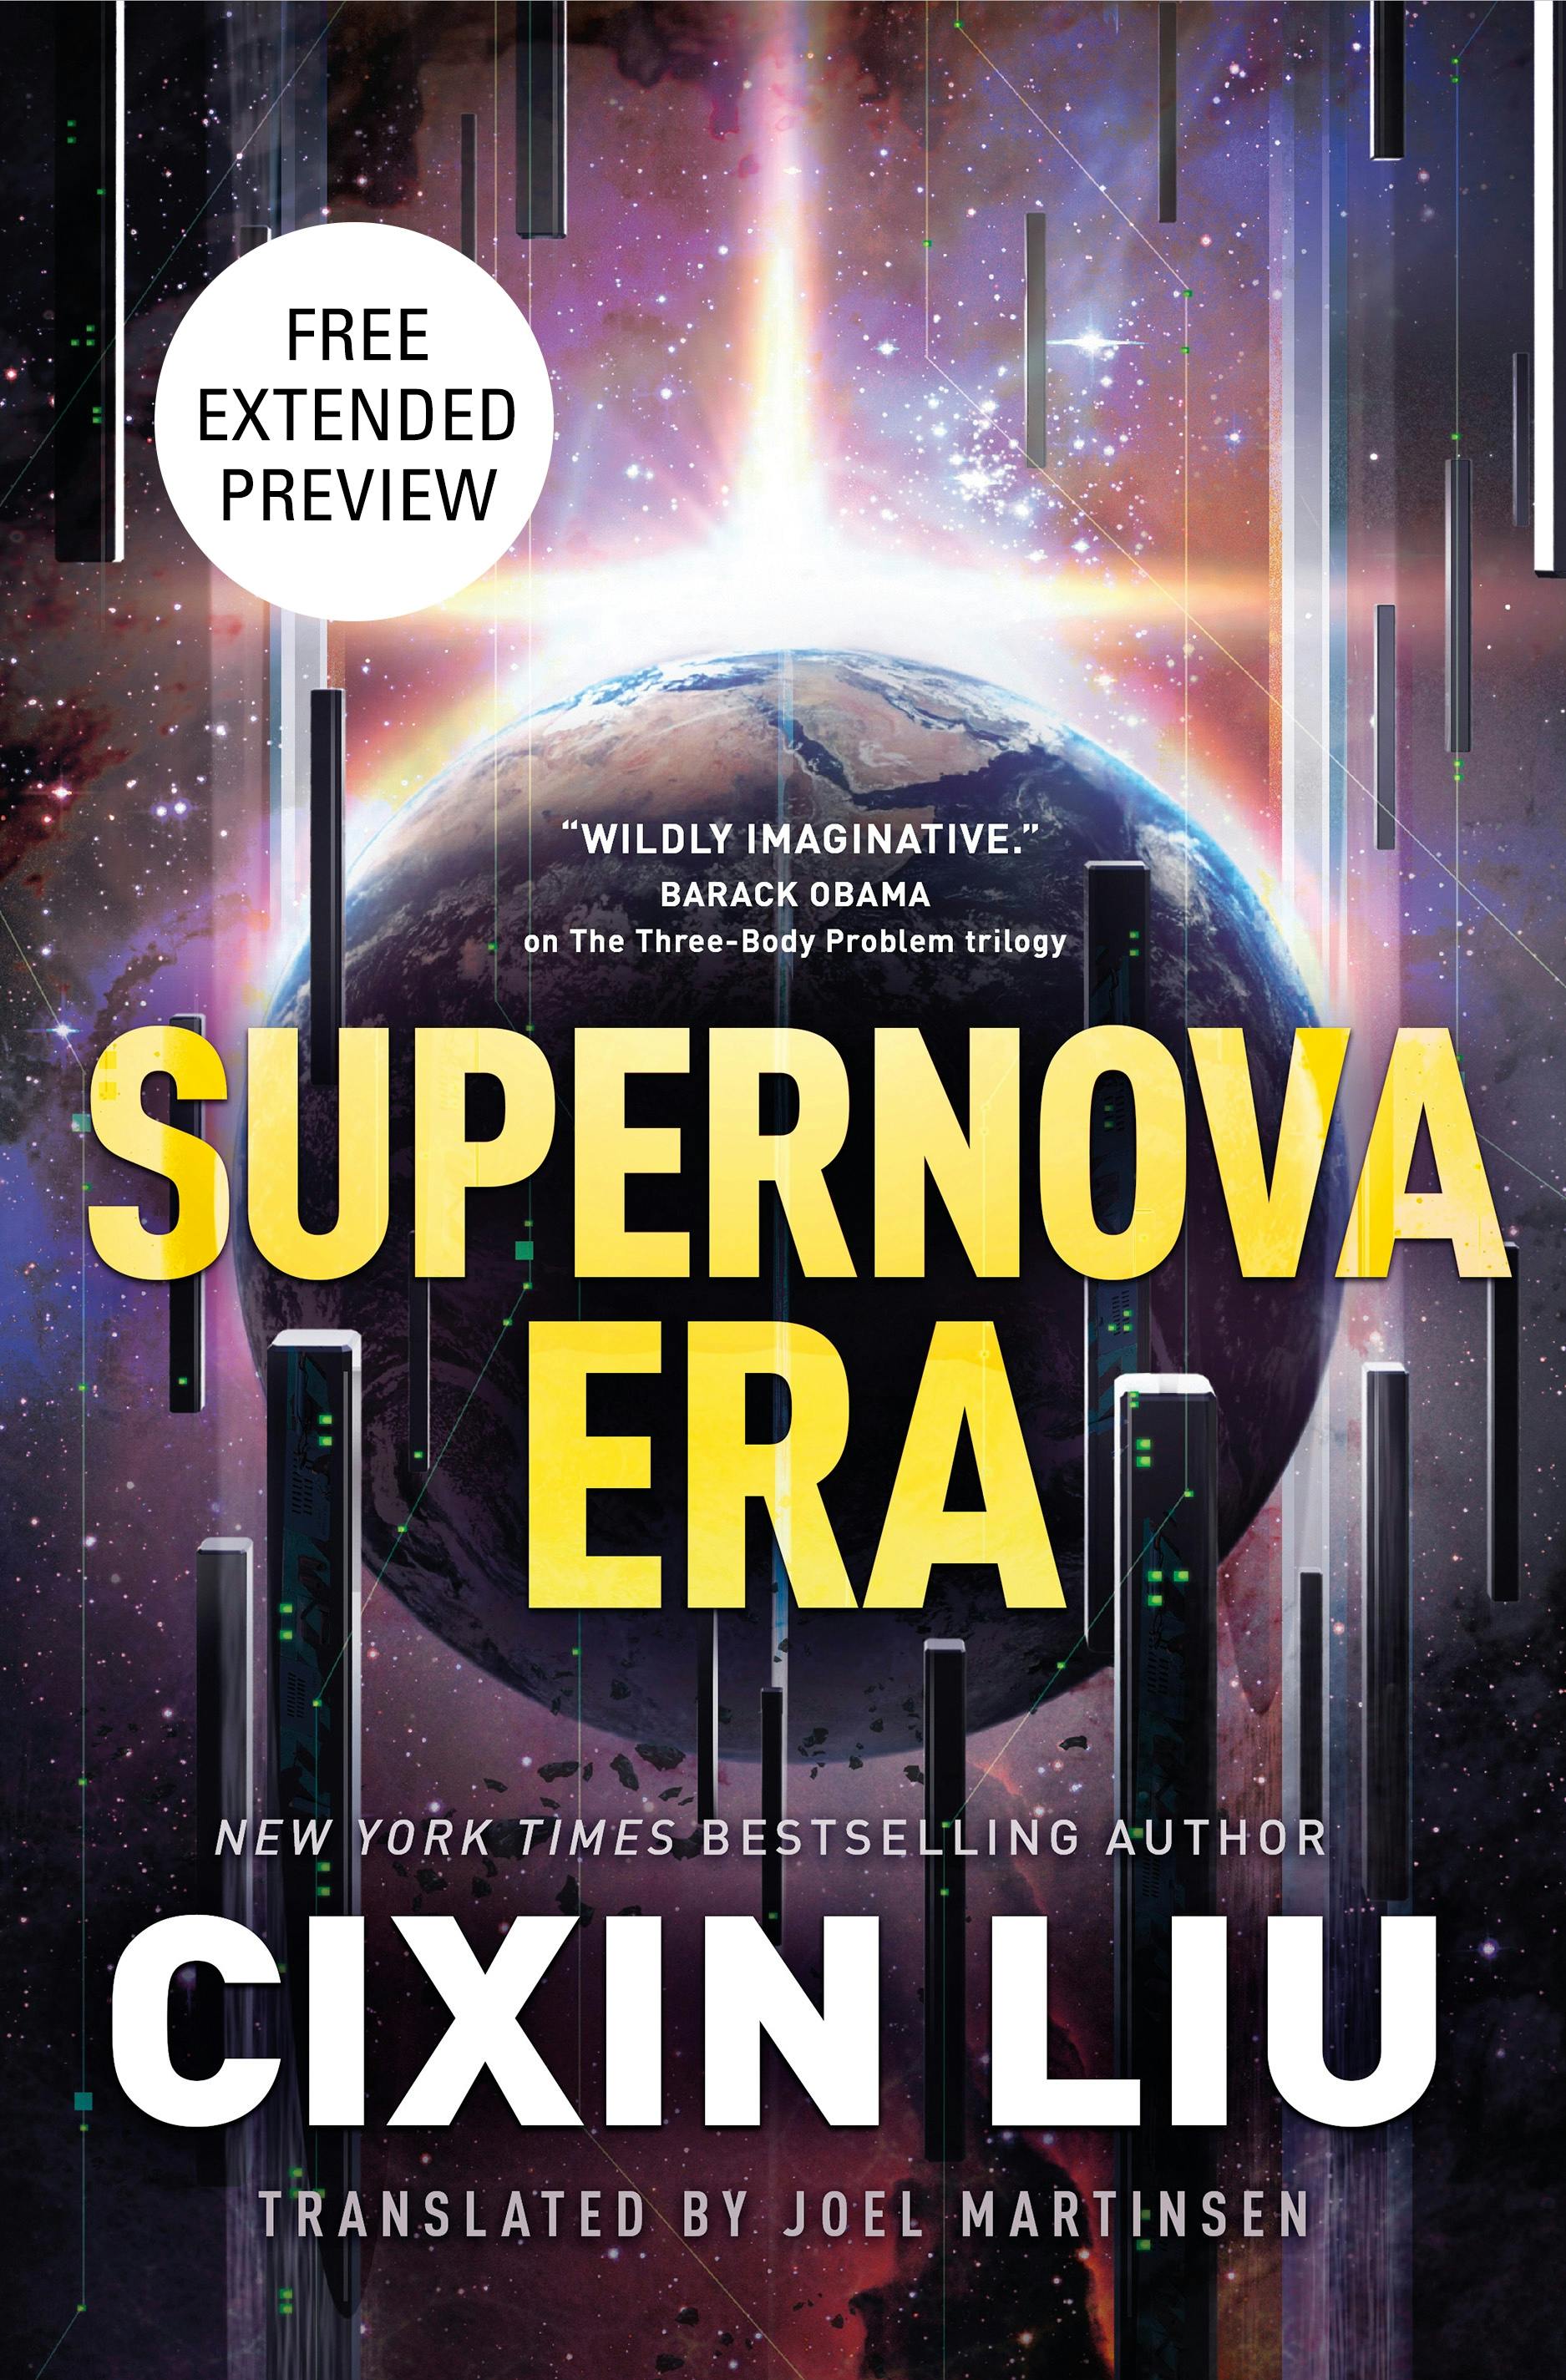 Cover for the book titled as: Supernova Era Sneak Peek